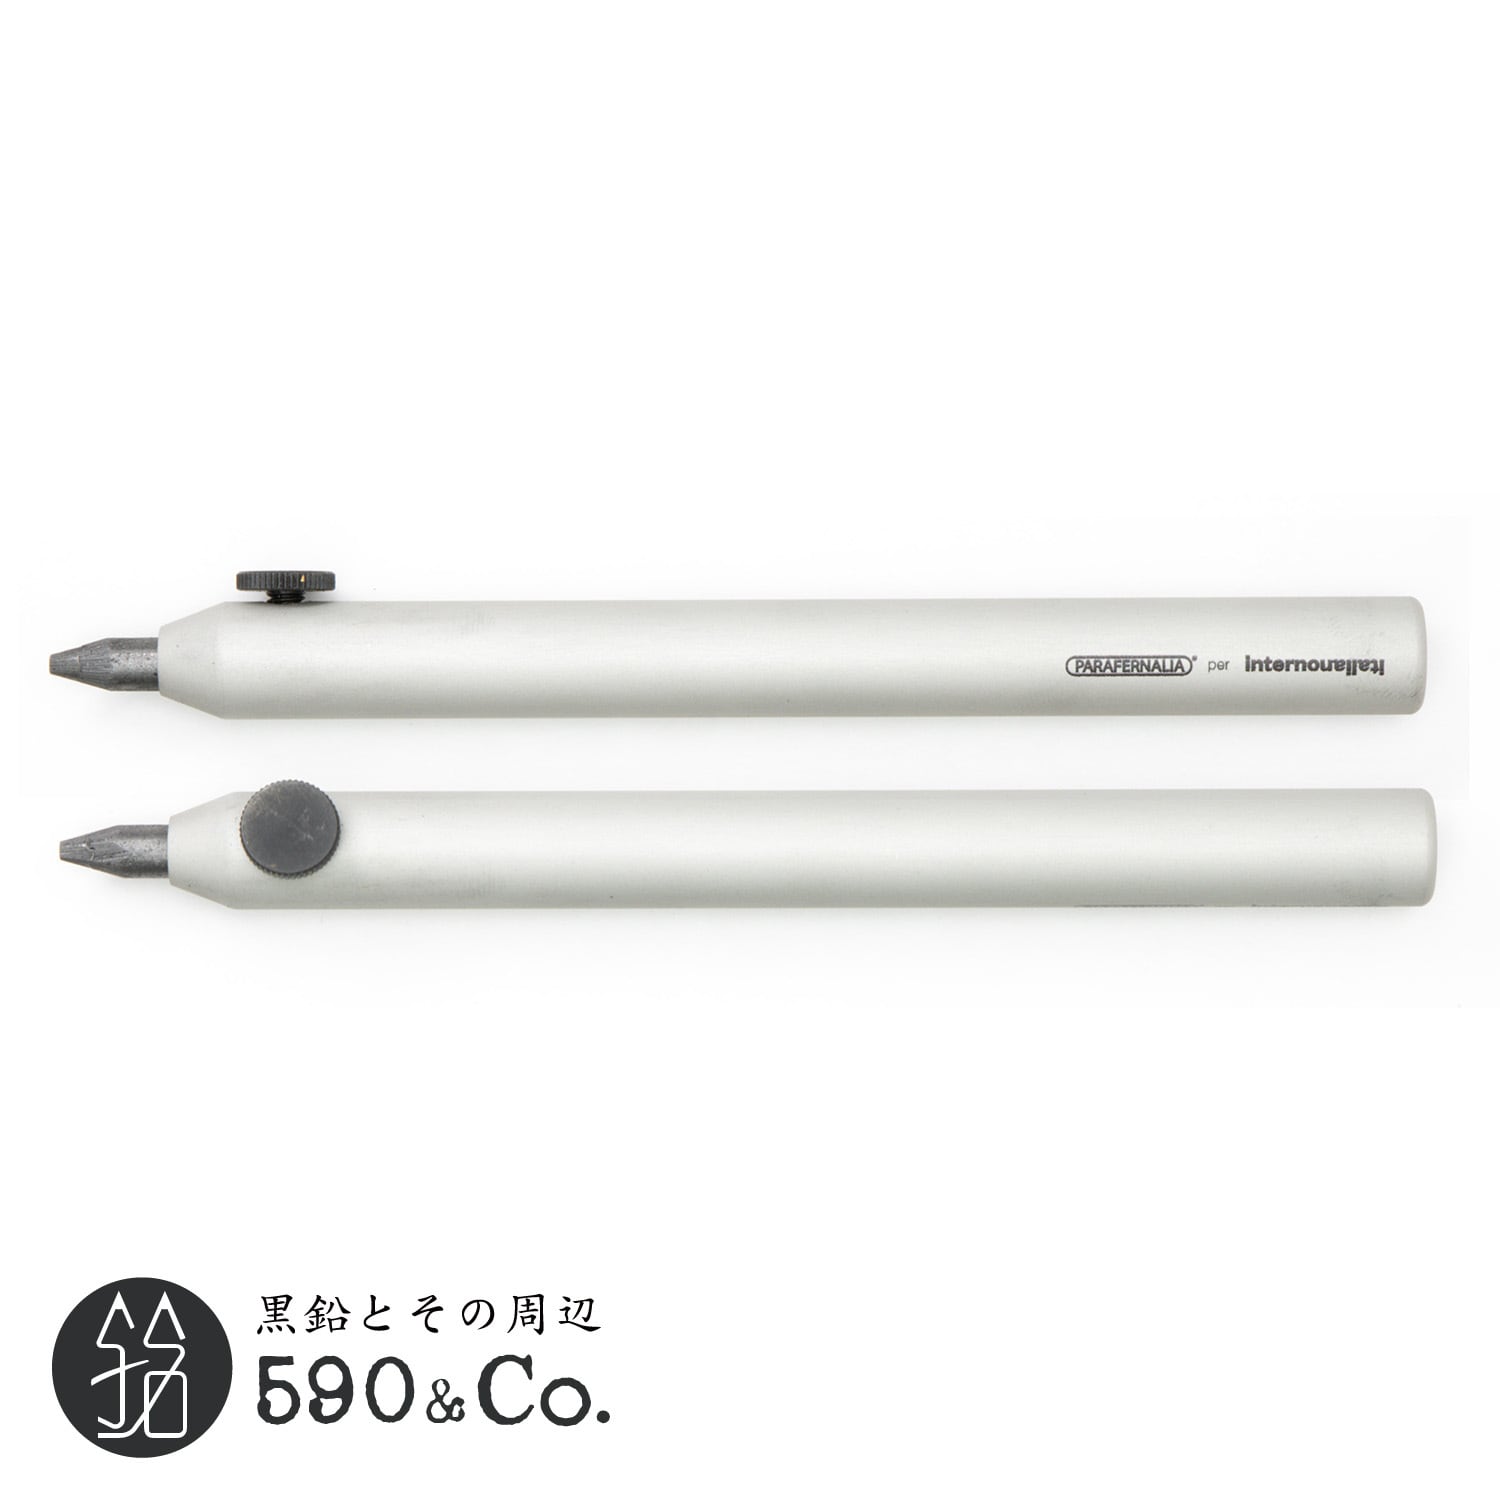 【PARAFERNALIA × Internoitaliano】 Neri Mechanical Pencil 5.5ミリ芯ホルダー (アルミ)  590Co.